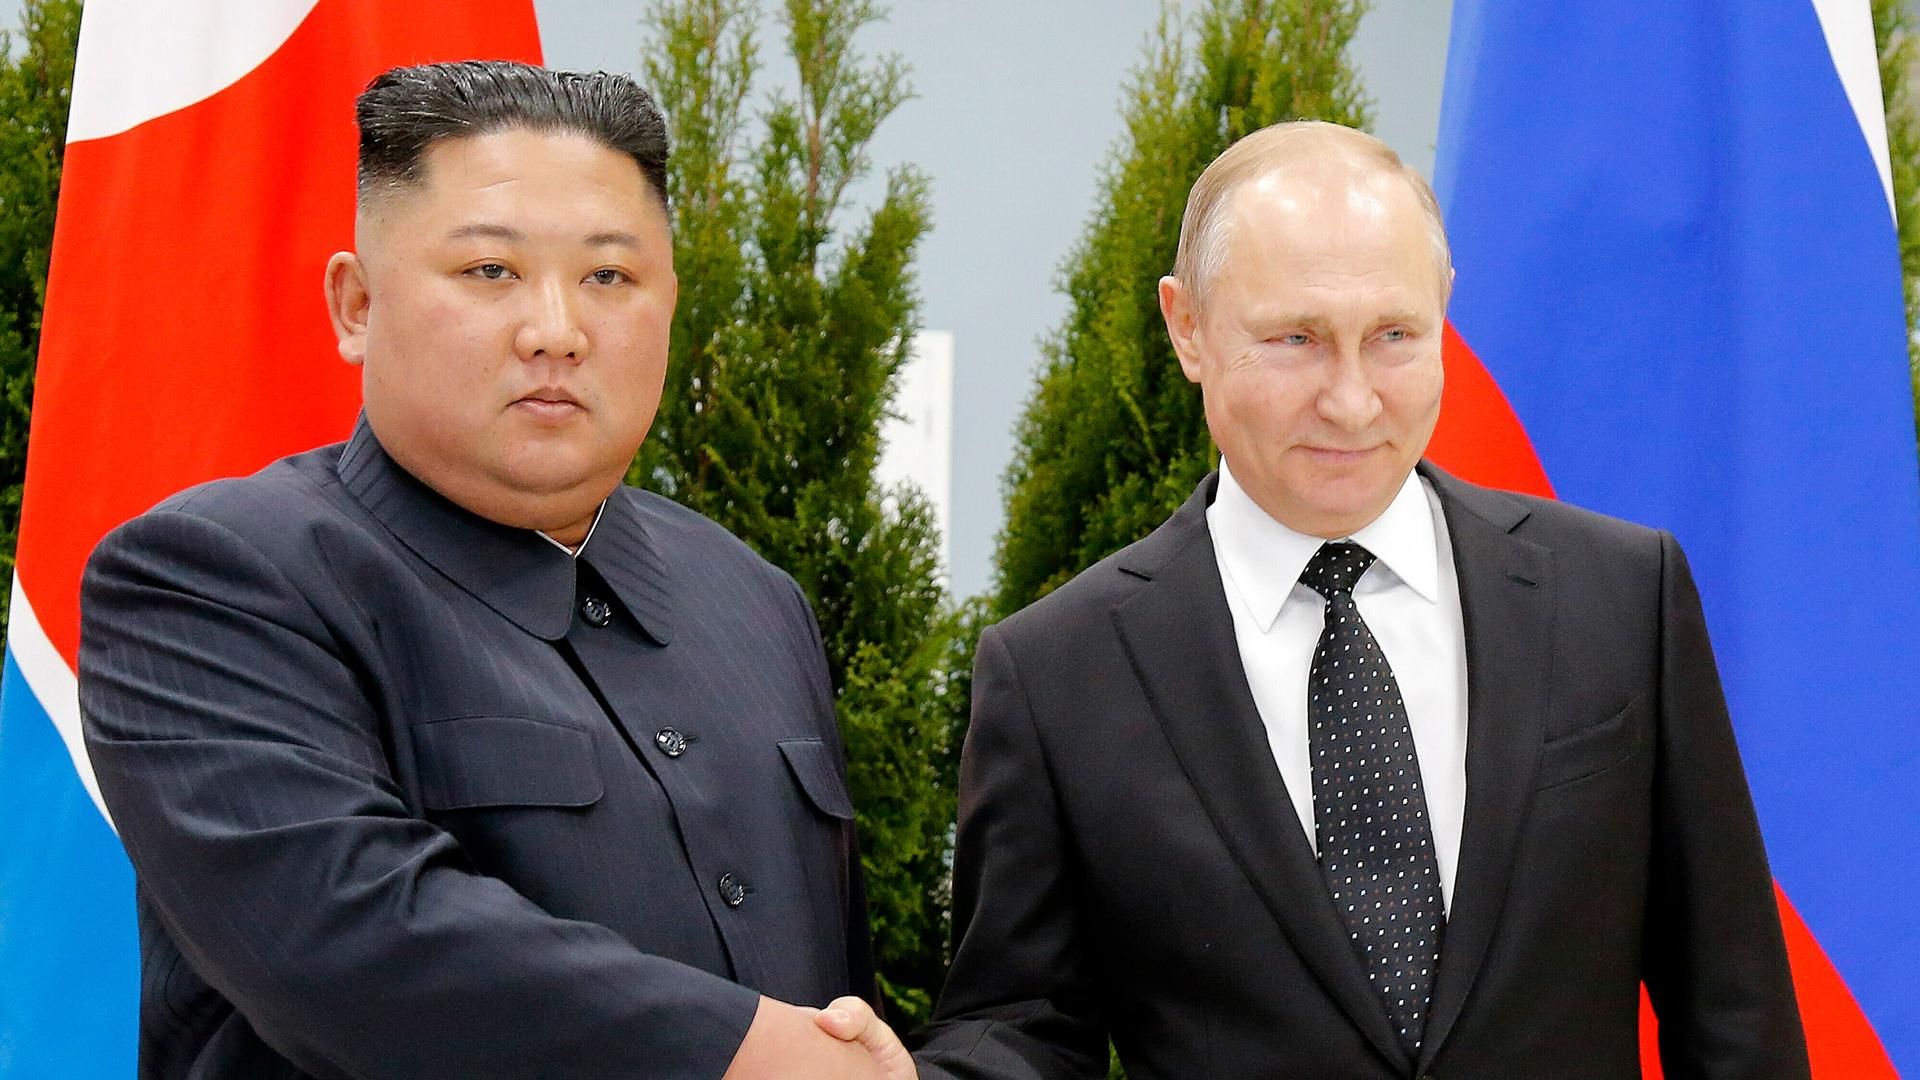 Russian President Vladimir Putin, right, and North Korea's leader Kim Jong-un shake hands during their meeting in Vladivostok, Russia on April 25, 2019. 